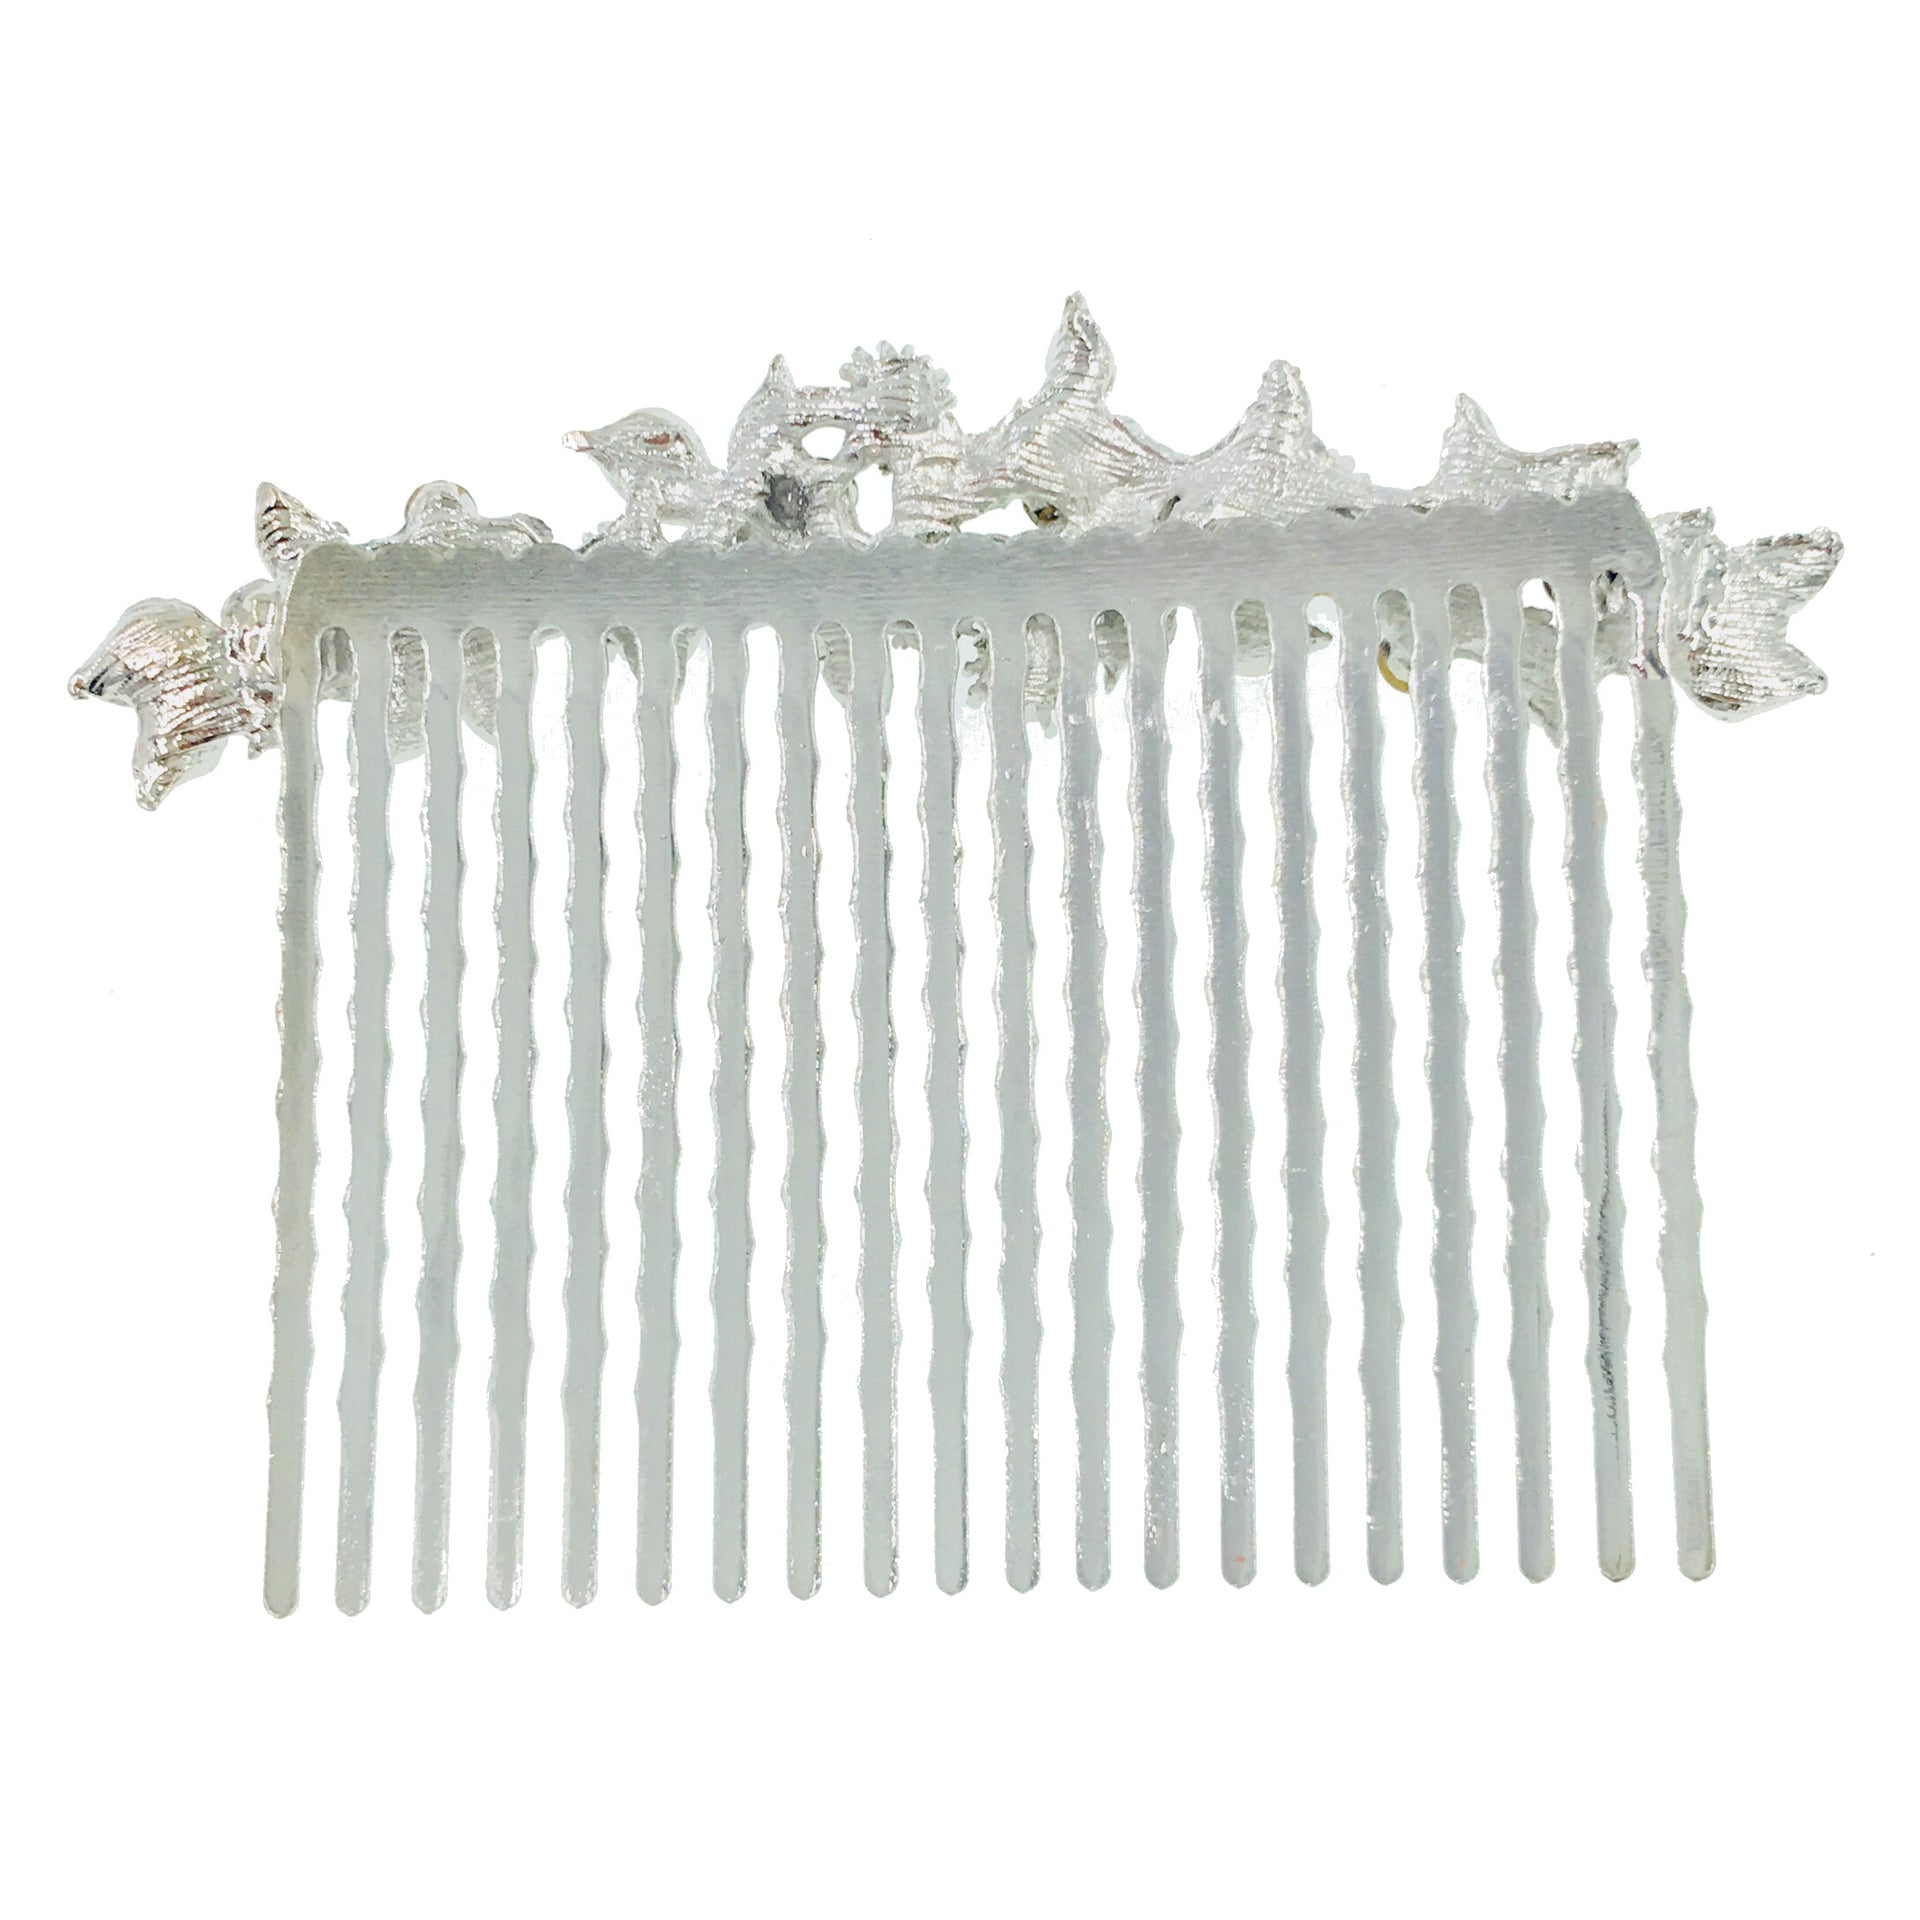 Gypsophila Flower Cluster Hair Comb Swarovski Crystal Vintage Simple silver base Black, Hair Comb - MOGHANT